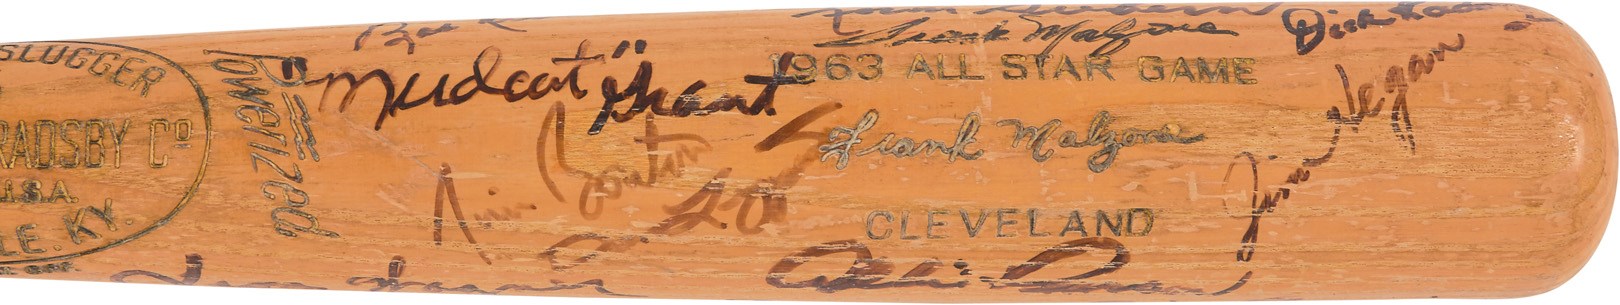 - 1963 Frank Malzone All-Star Game Team-Signed Bat (JSA)